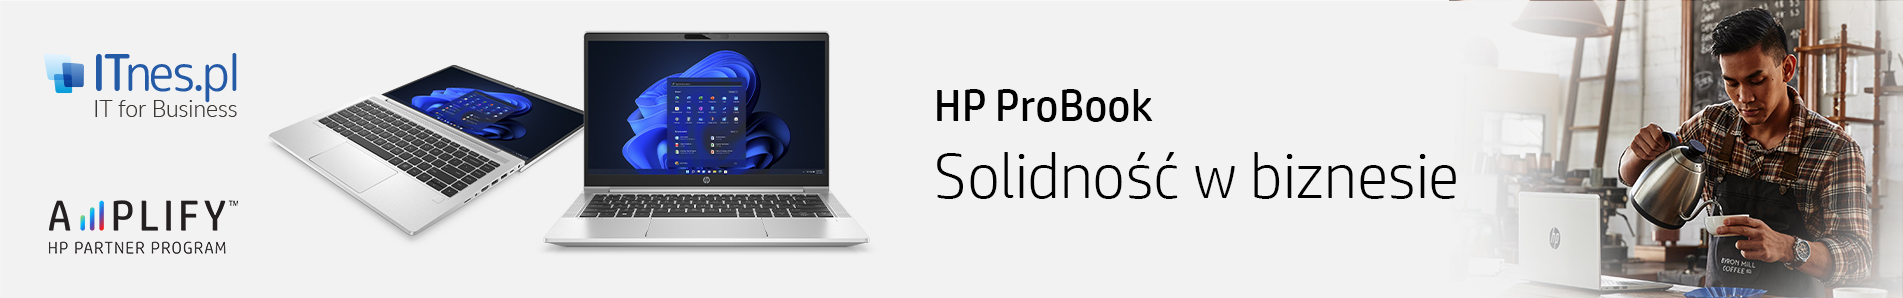 Laptopy HP ProBook  w sklepie ITnes.pl